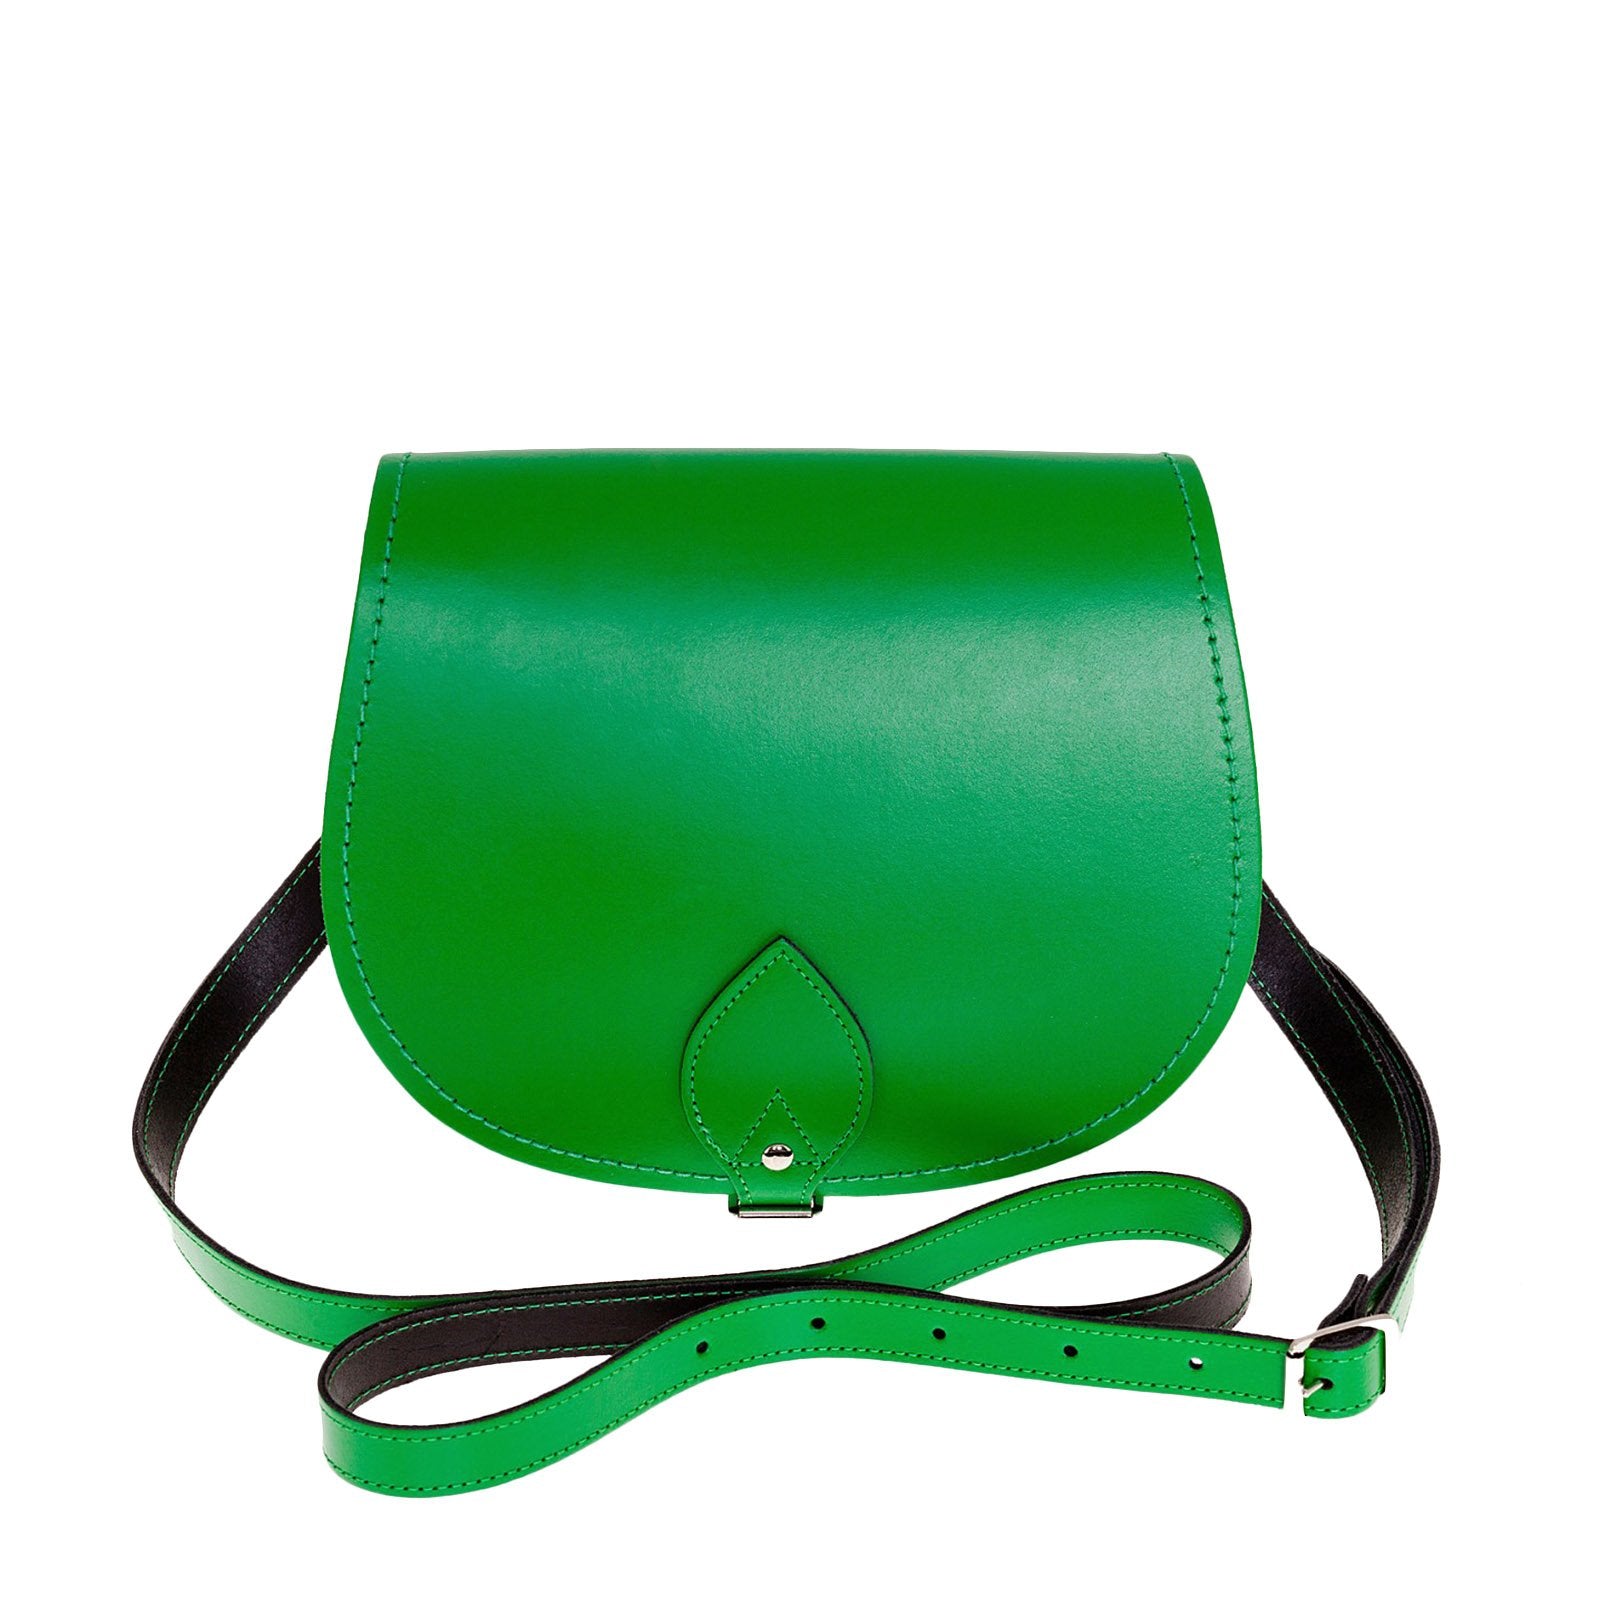 Handmade Leather Saddle Bag - Green - Large